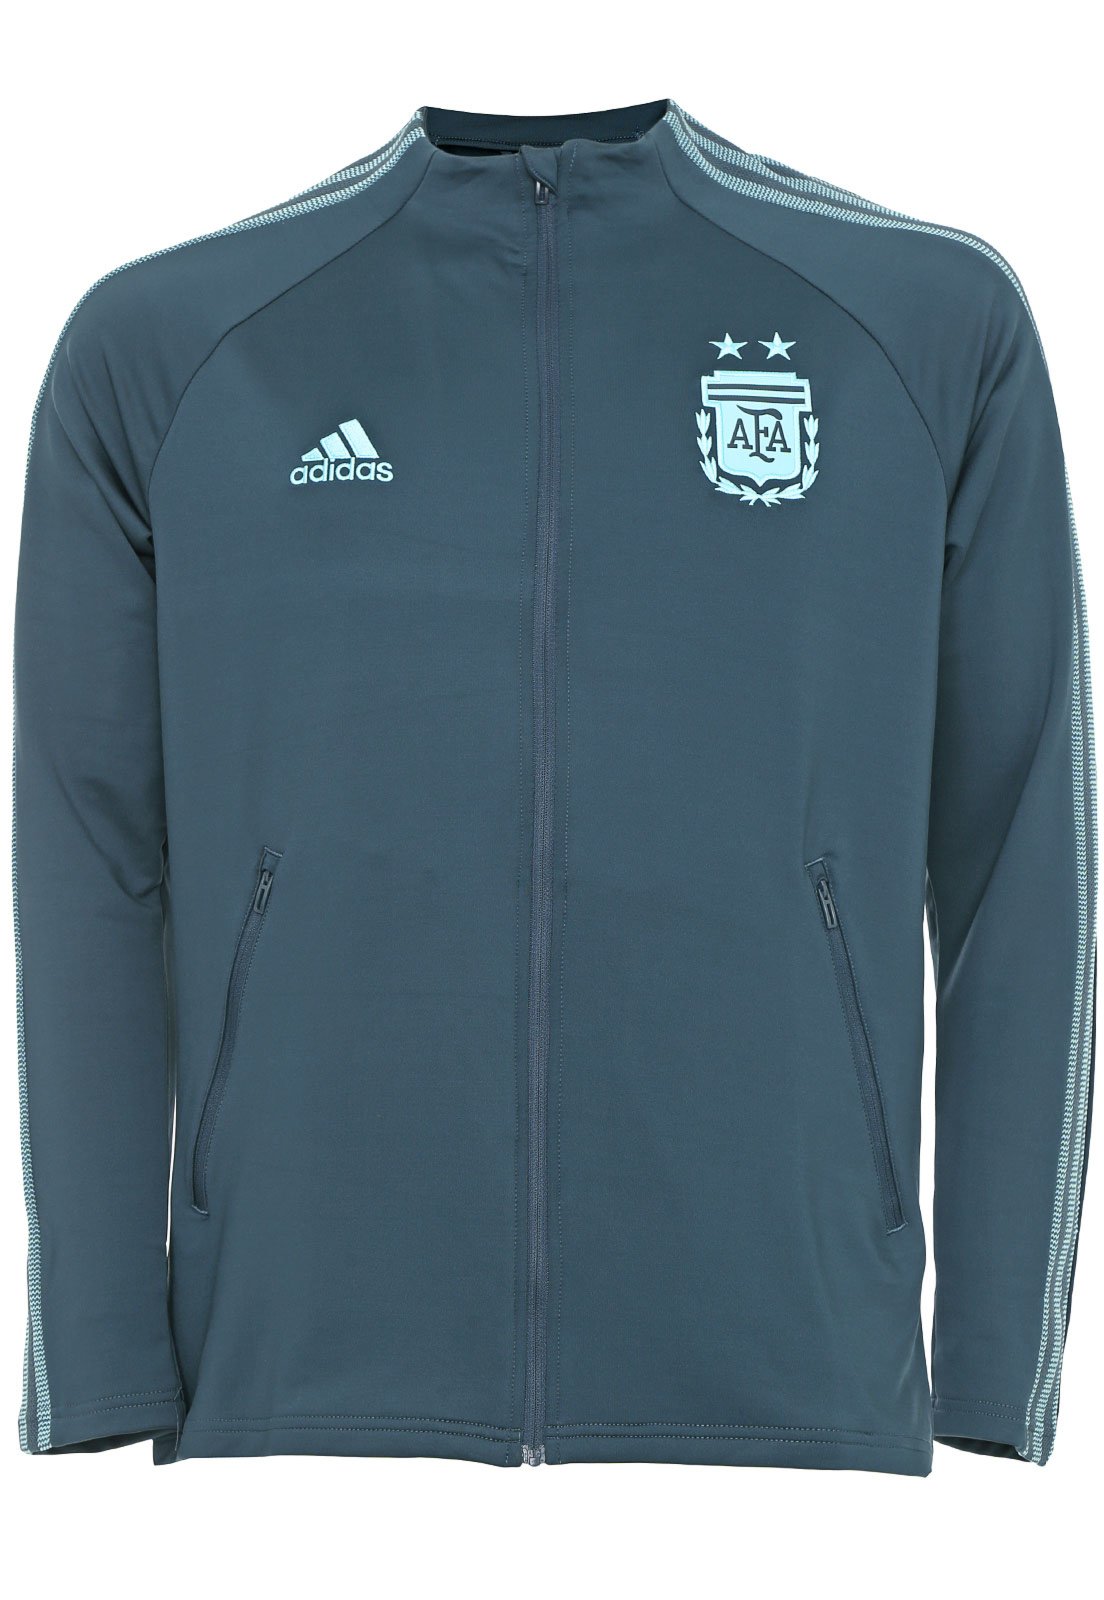 Jaqueta Argentina Adidas 2014